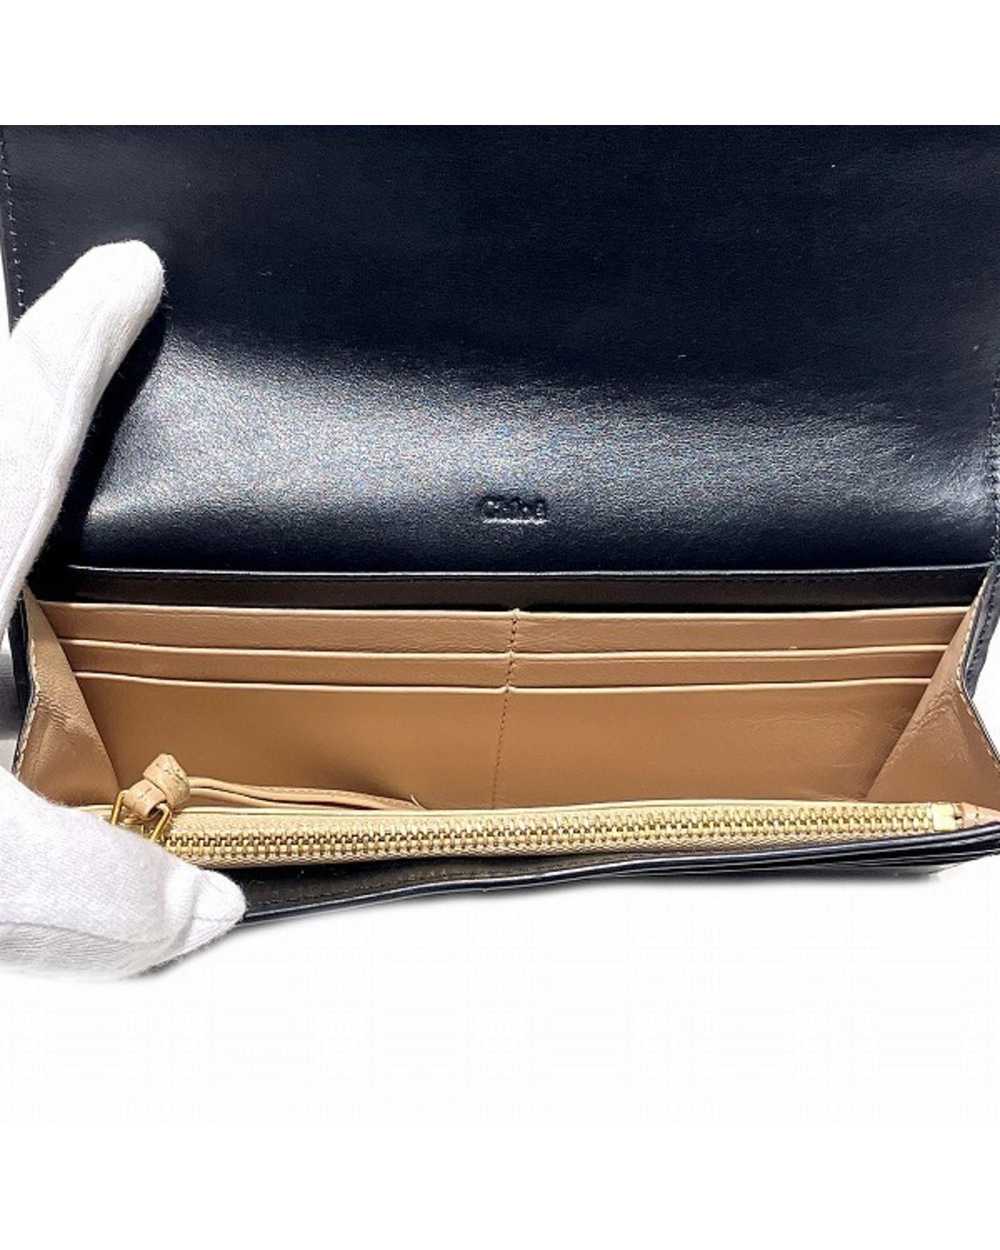 Chloe Refined Black Leather Long Wallet for Women - image 5